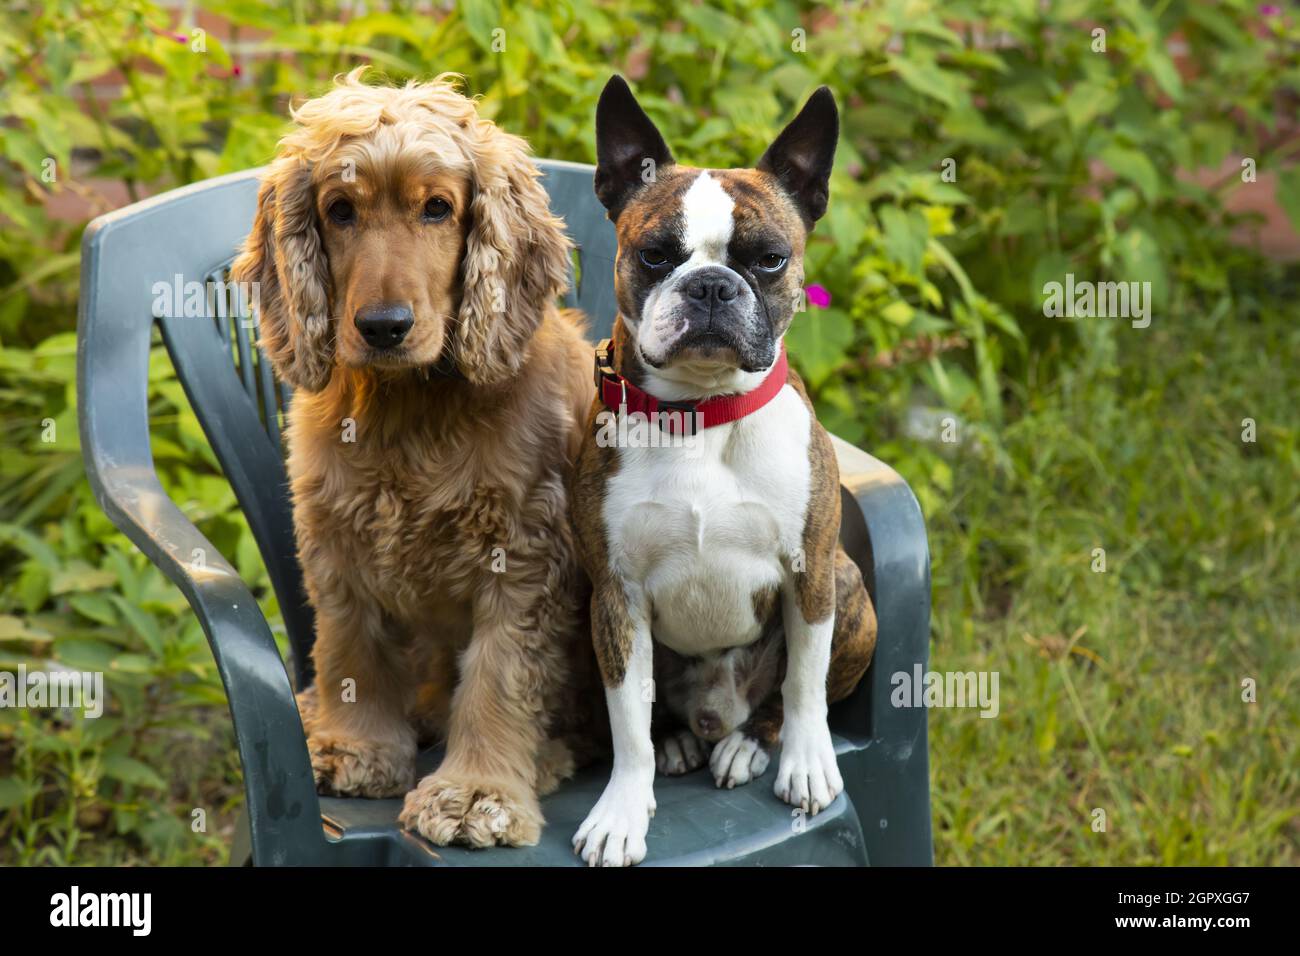 Boston Terrier and Cocker Spaniel portrait in summer garden Stock Photo